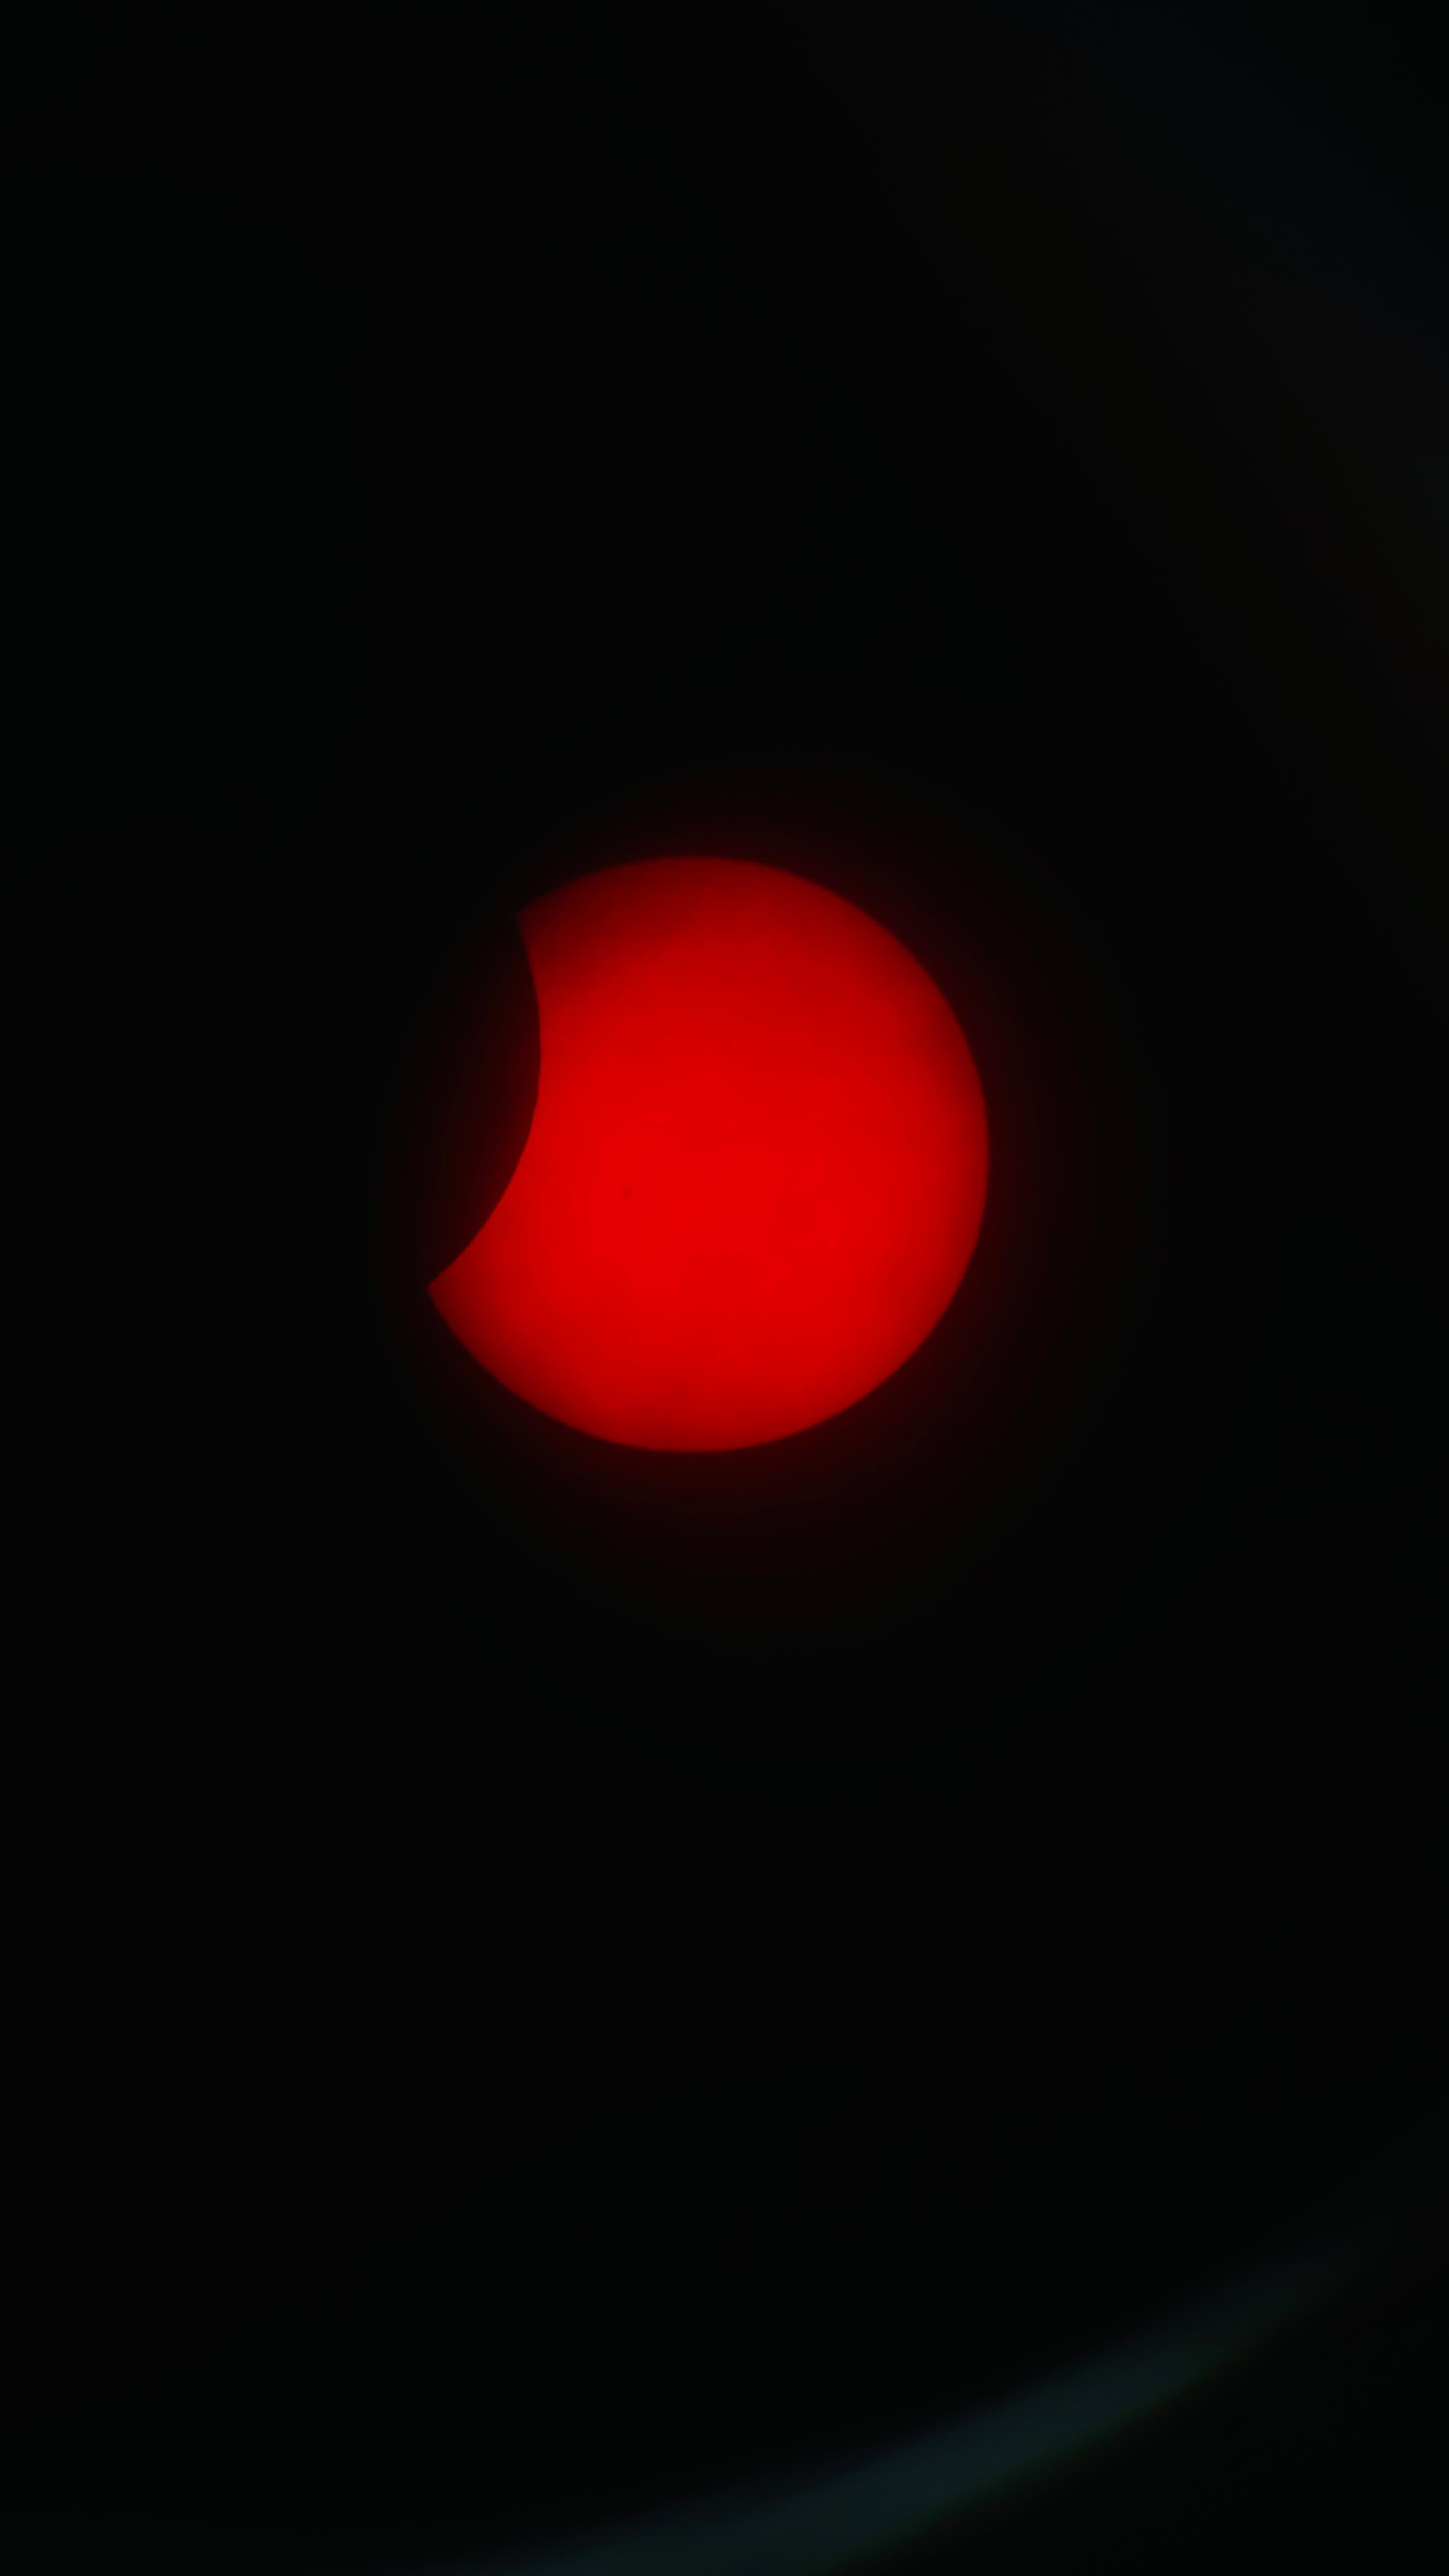 Eclipse parcial, toma por Josué Sánchez